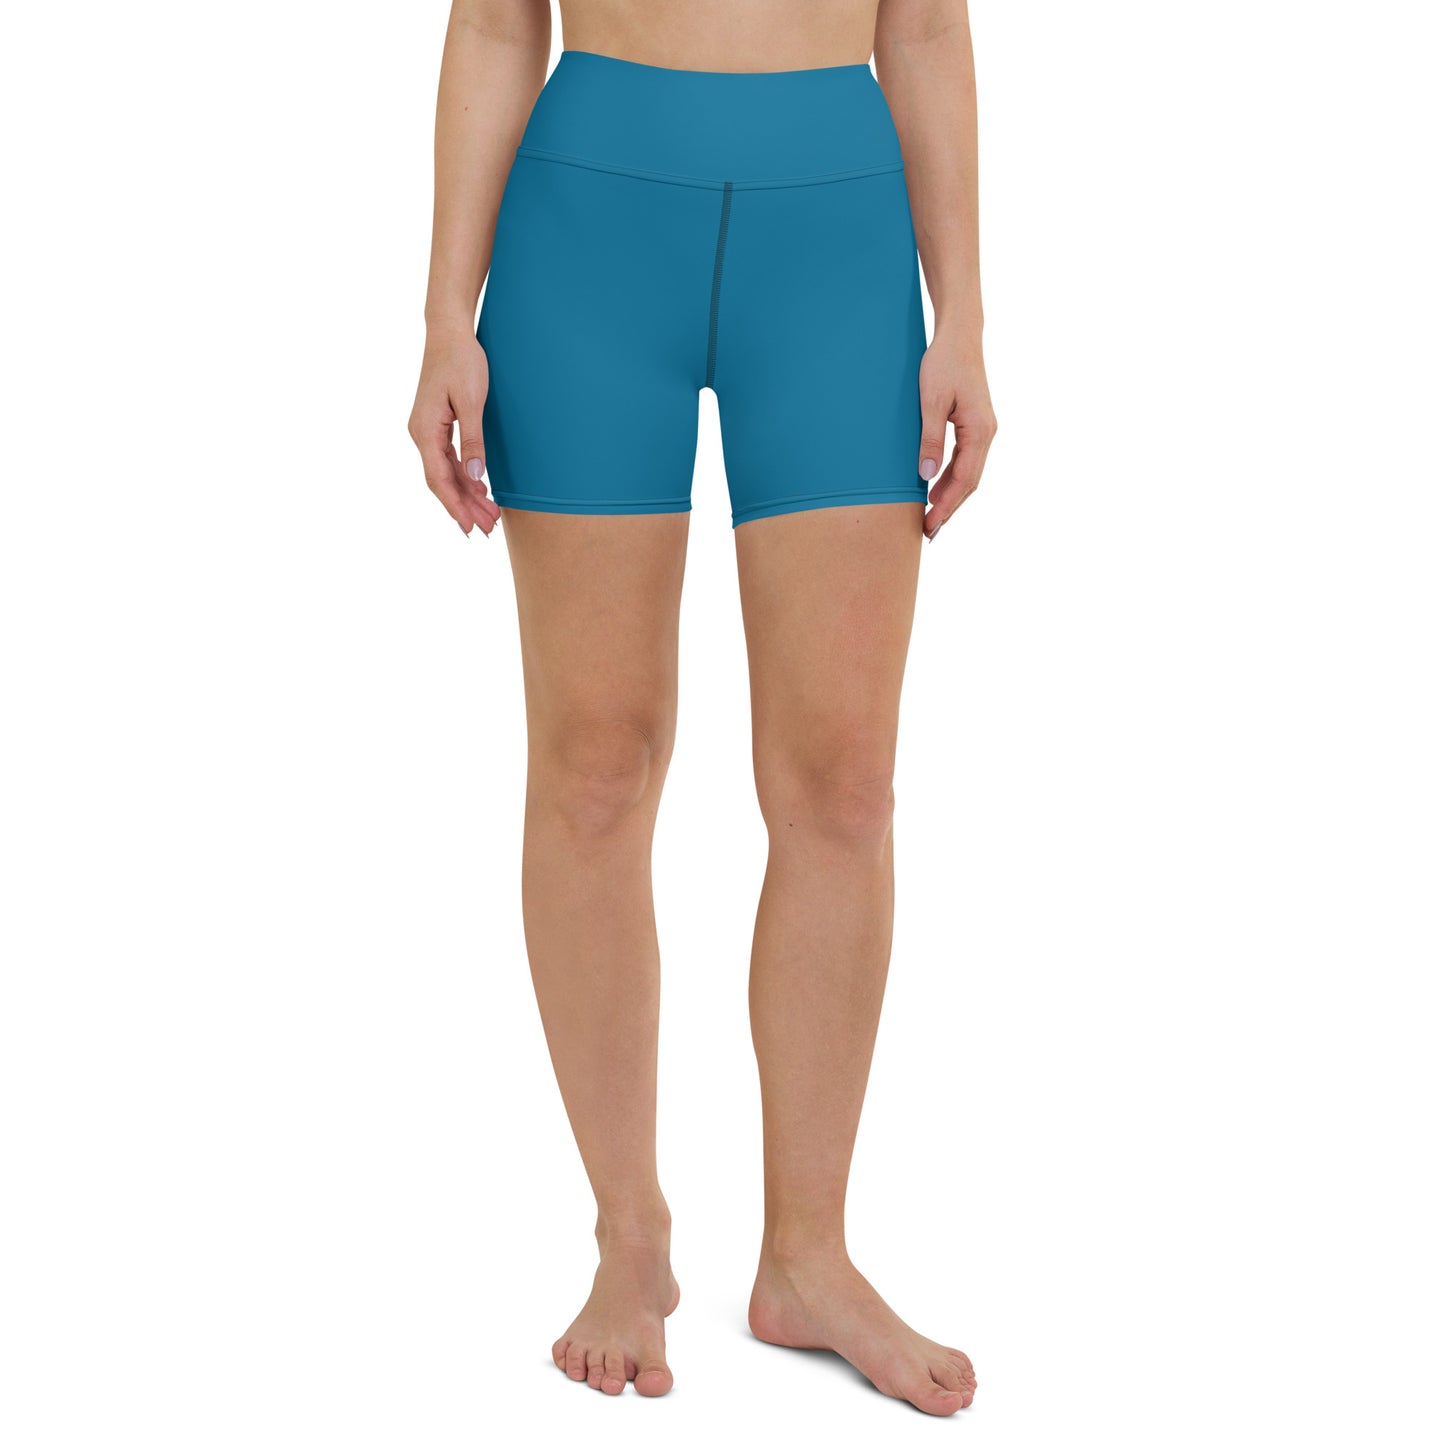 Cerulean Blue Fitness Yoga Shorts